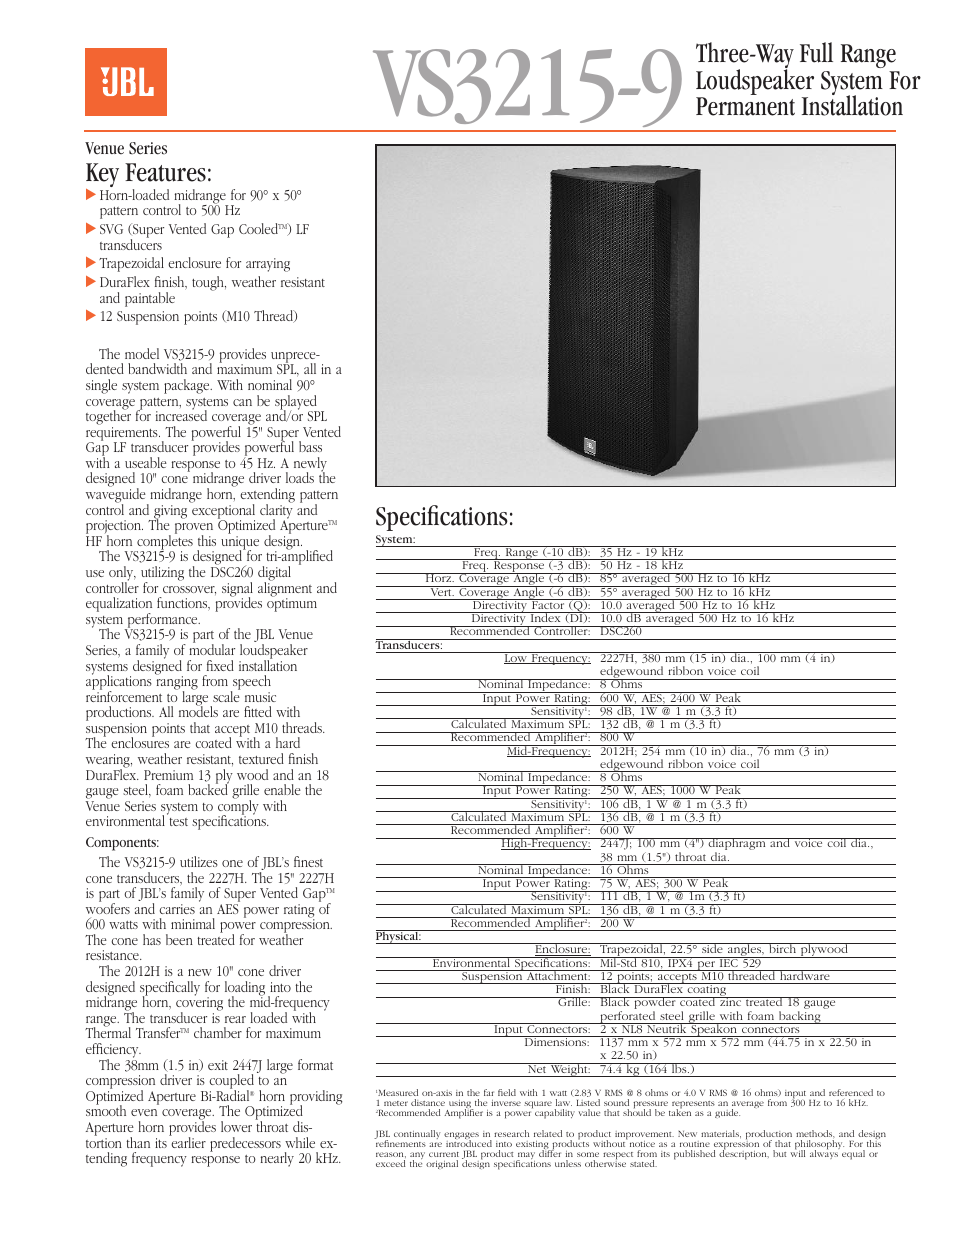 Three-Way Full Range Loudspeaker System for Permanent Installation VS3215-9